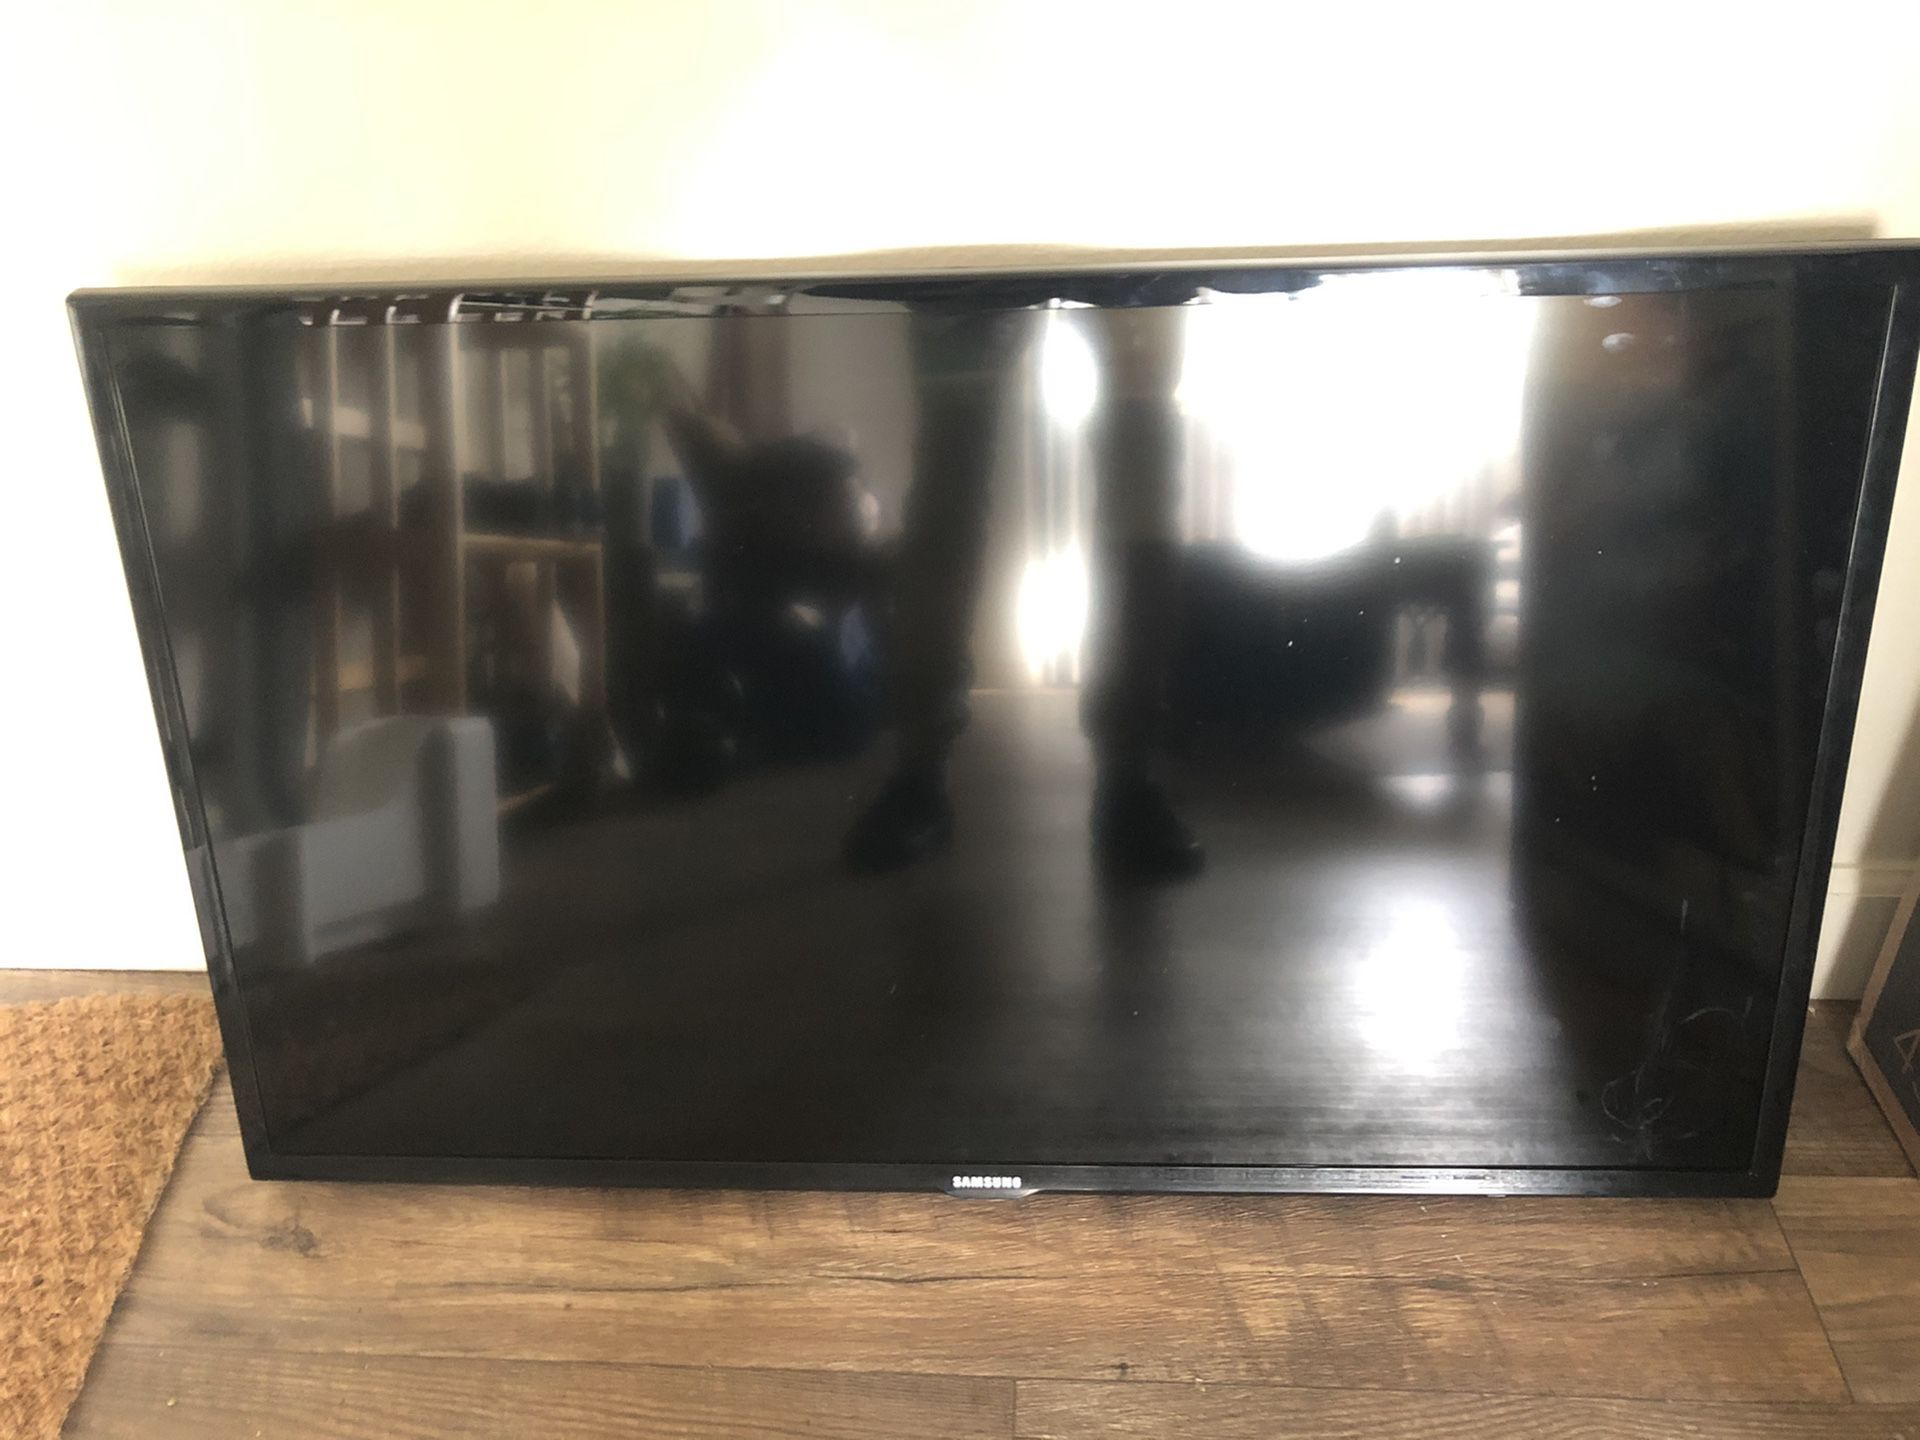 Samsung 40” High Definition TV